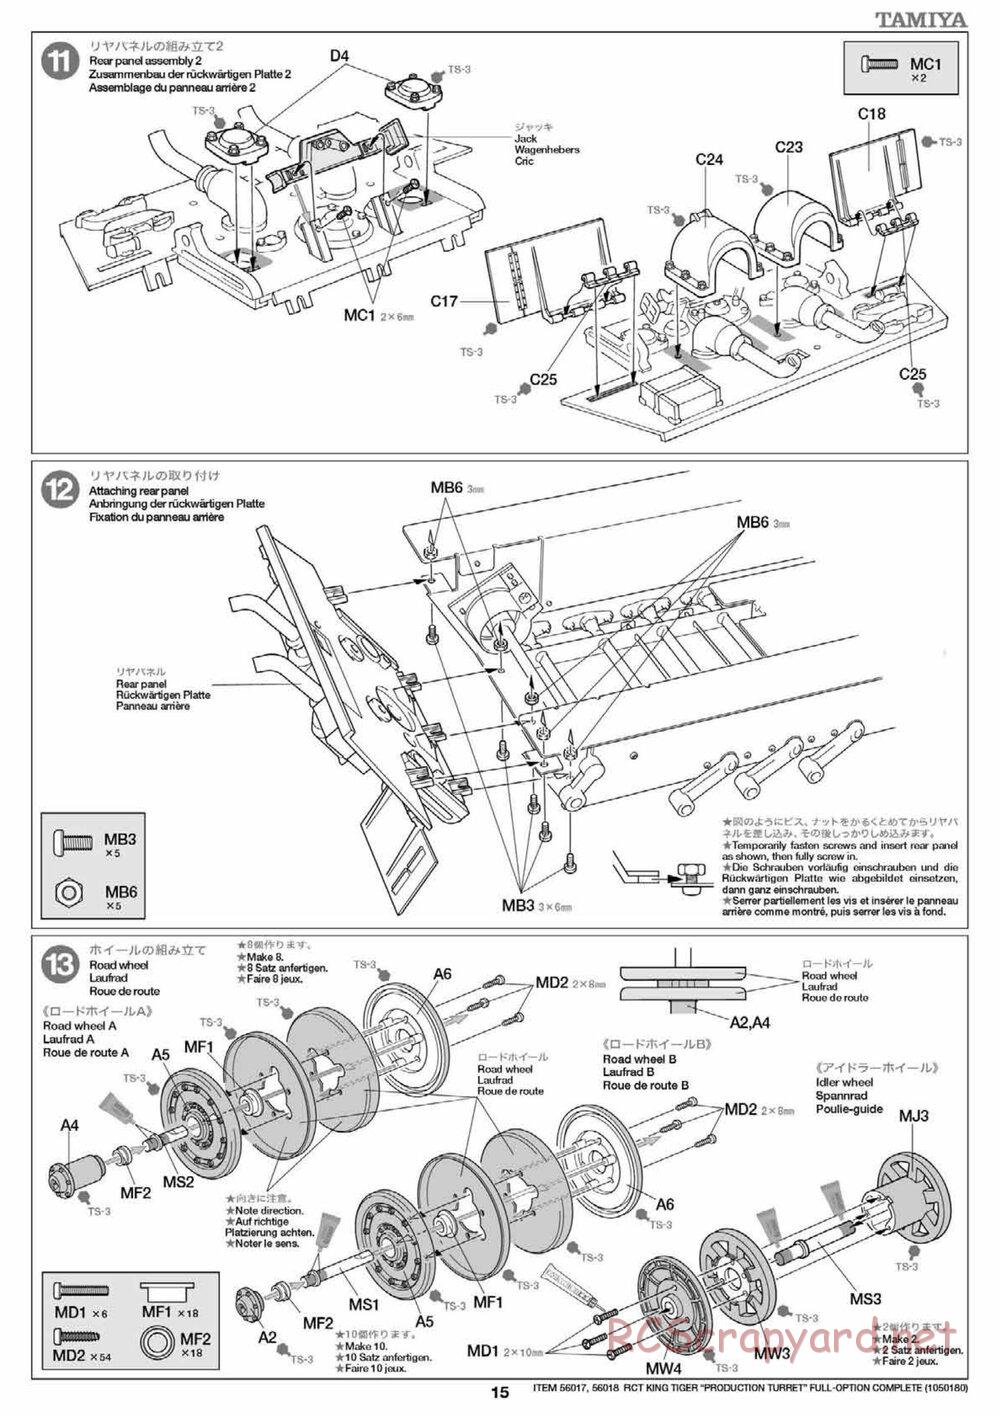 Tamiya - King Tiger - 1/16 Scale Chassis - Manual - Page 15